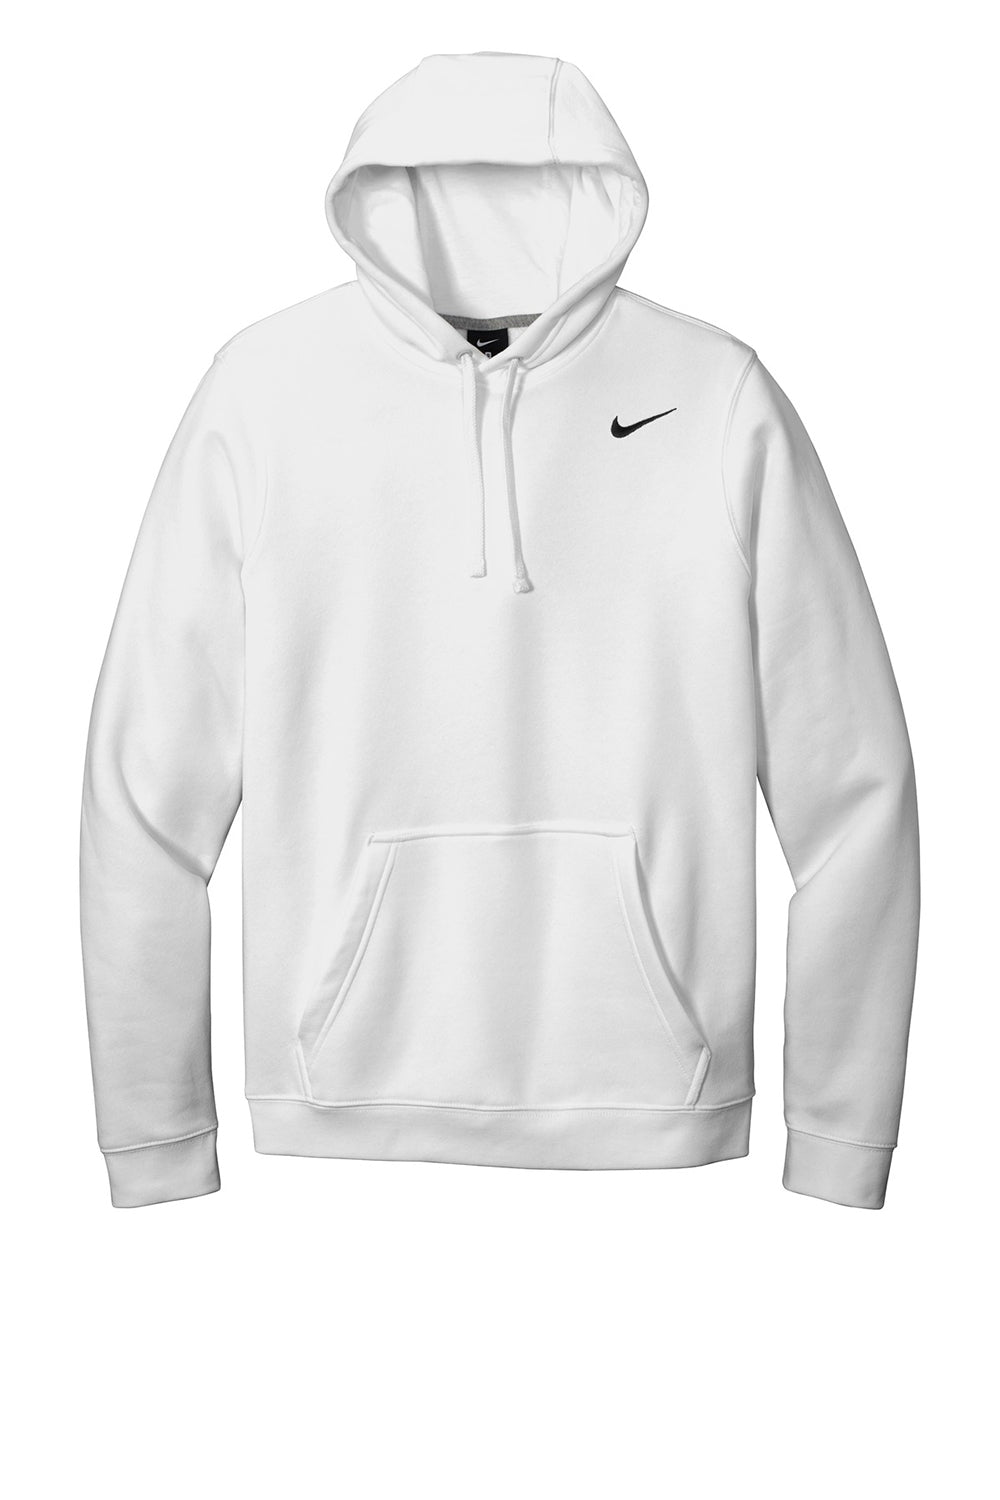 Nike CJ1611 Mens Club Fleece Hooded Sweatshirt Hoodie White Flat Front